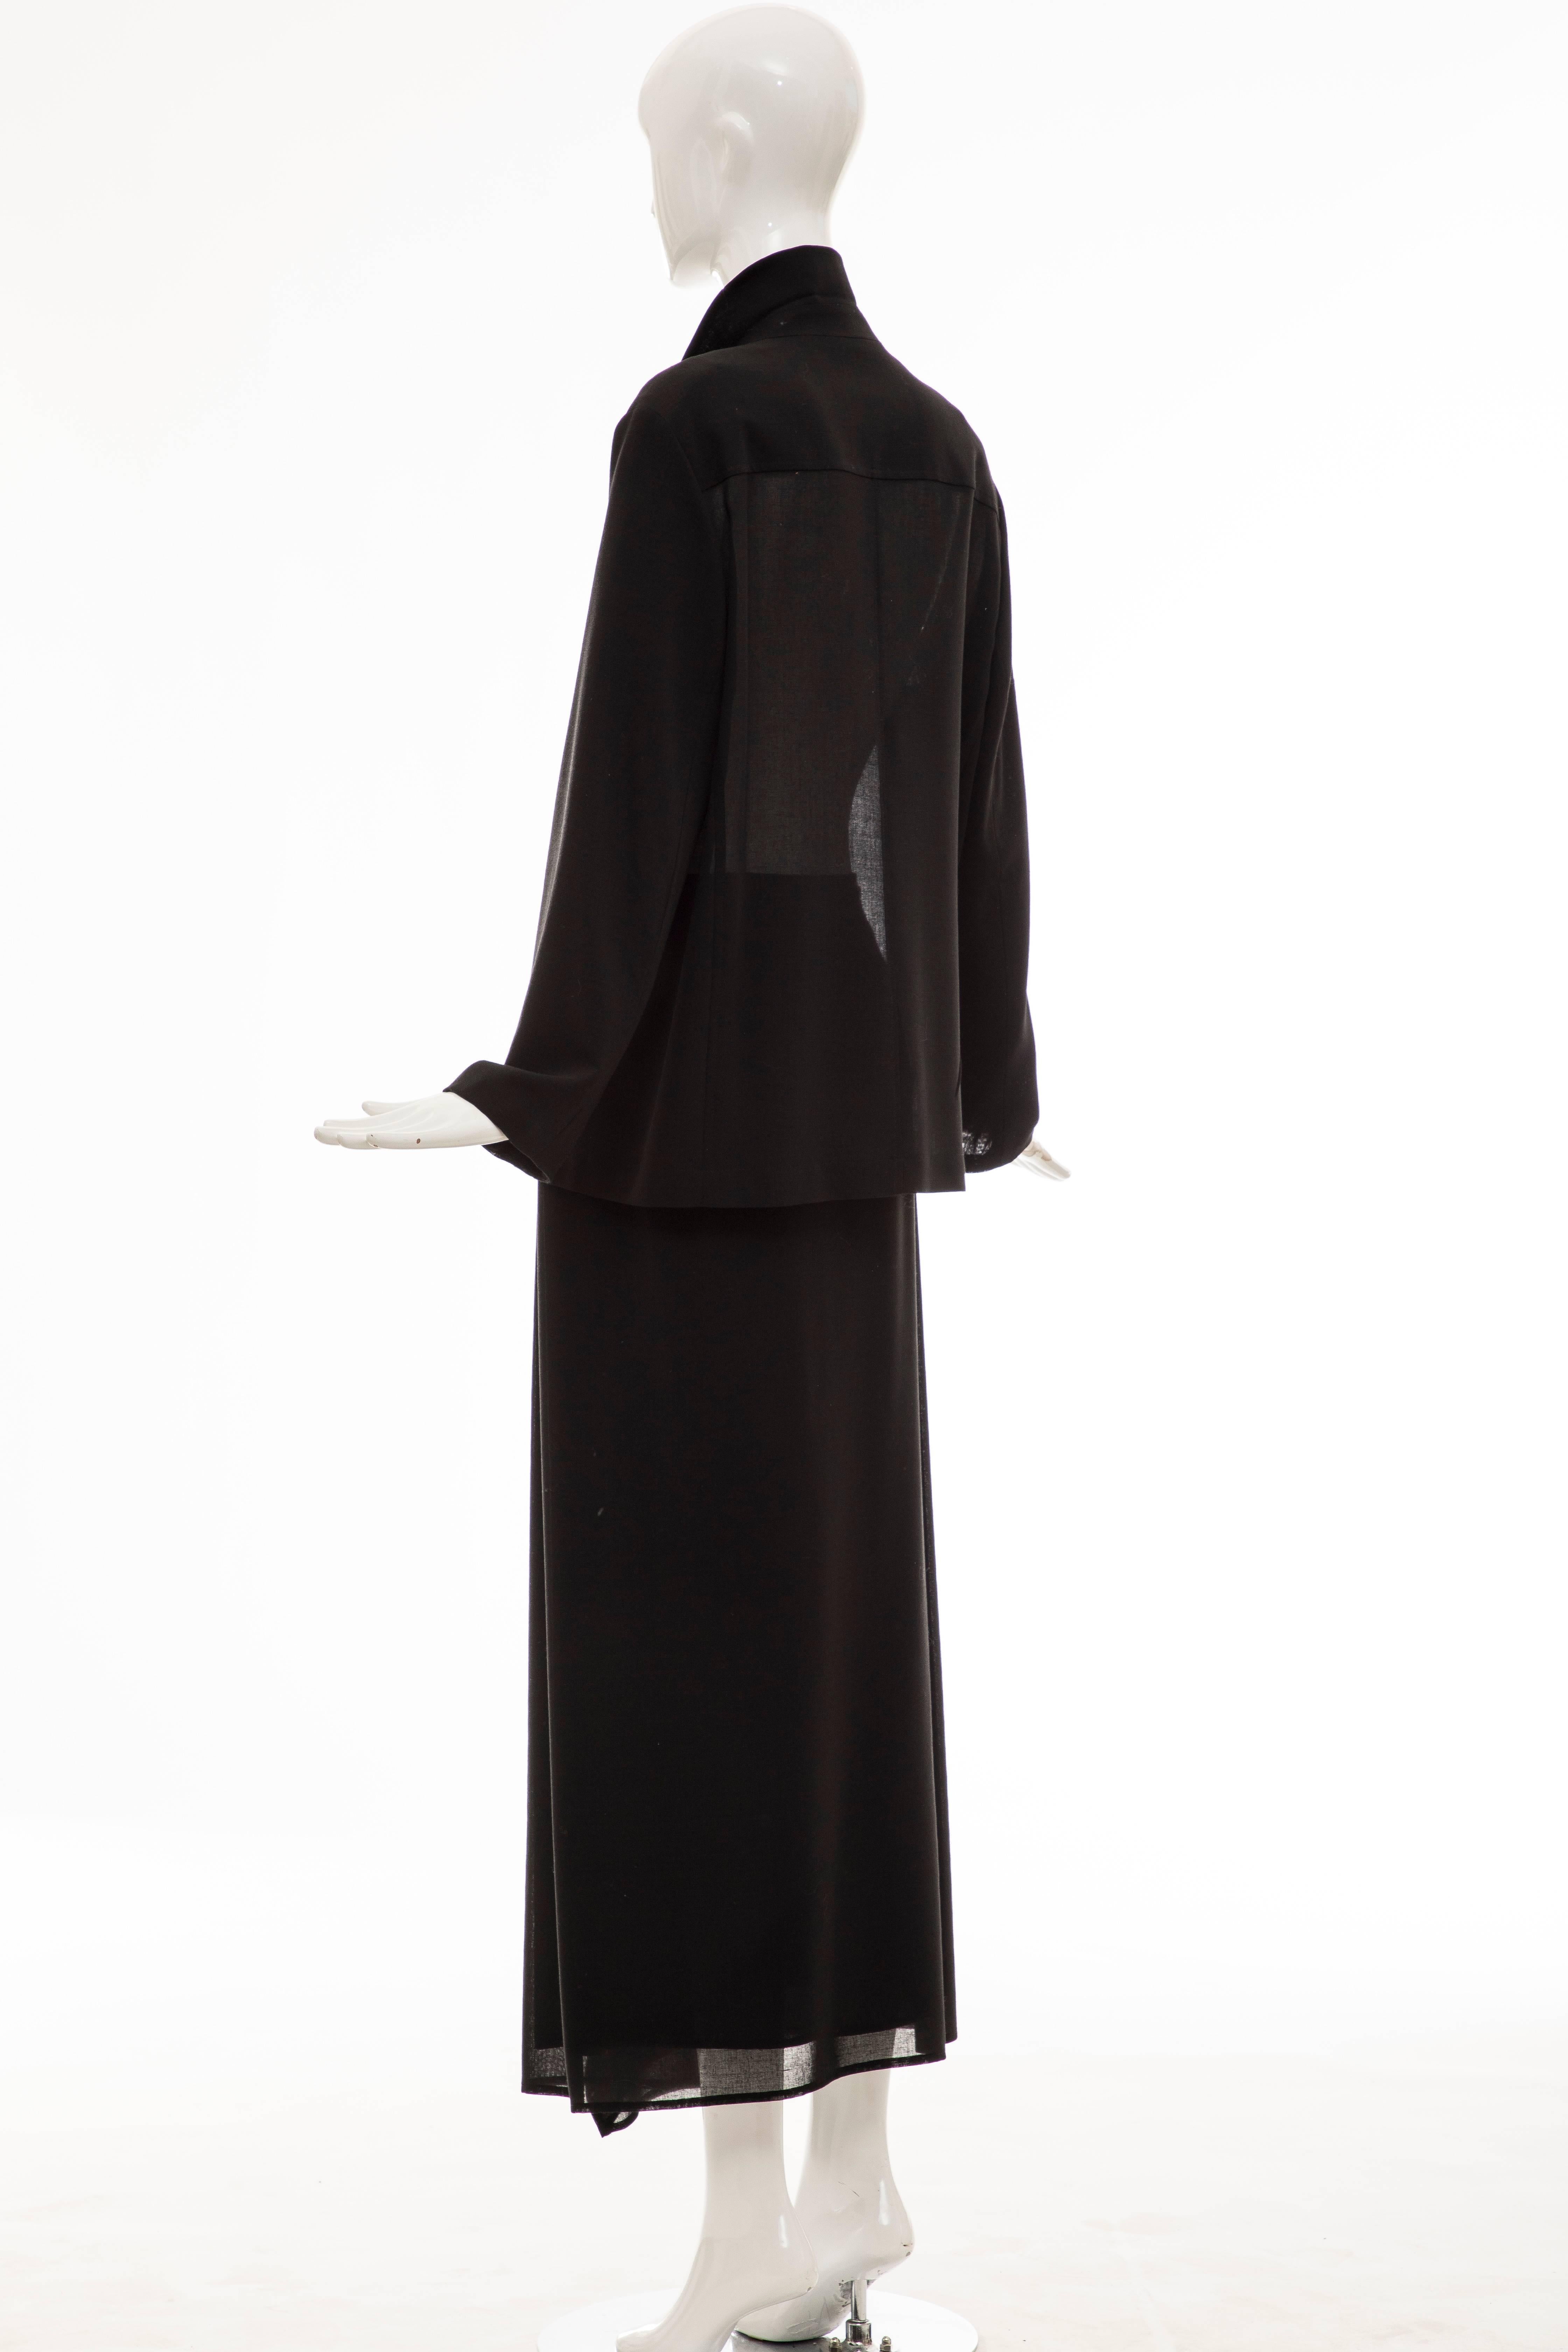 Cerruti 1881 Black Lightweight Wool Gauze Skirt-Suit, Circa 1990's For Sale 2